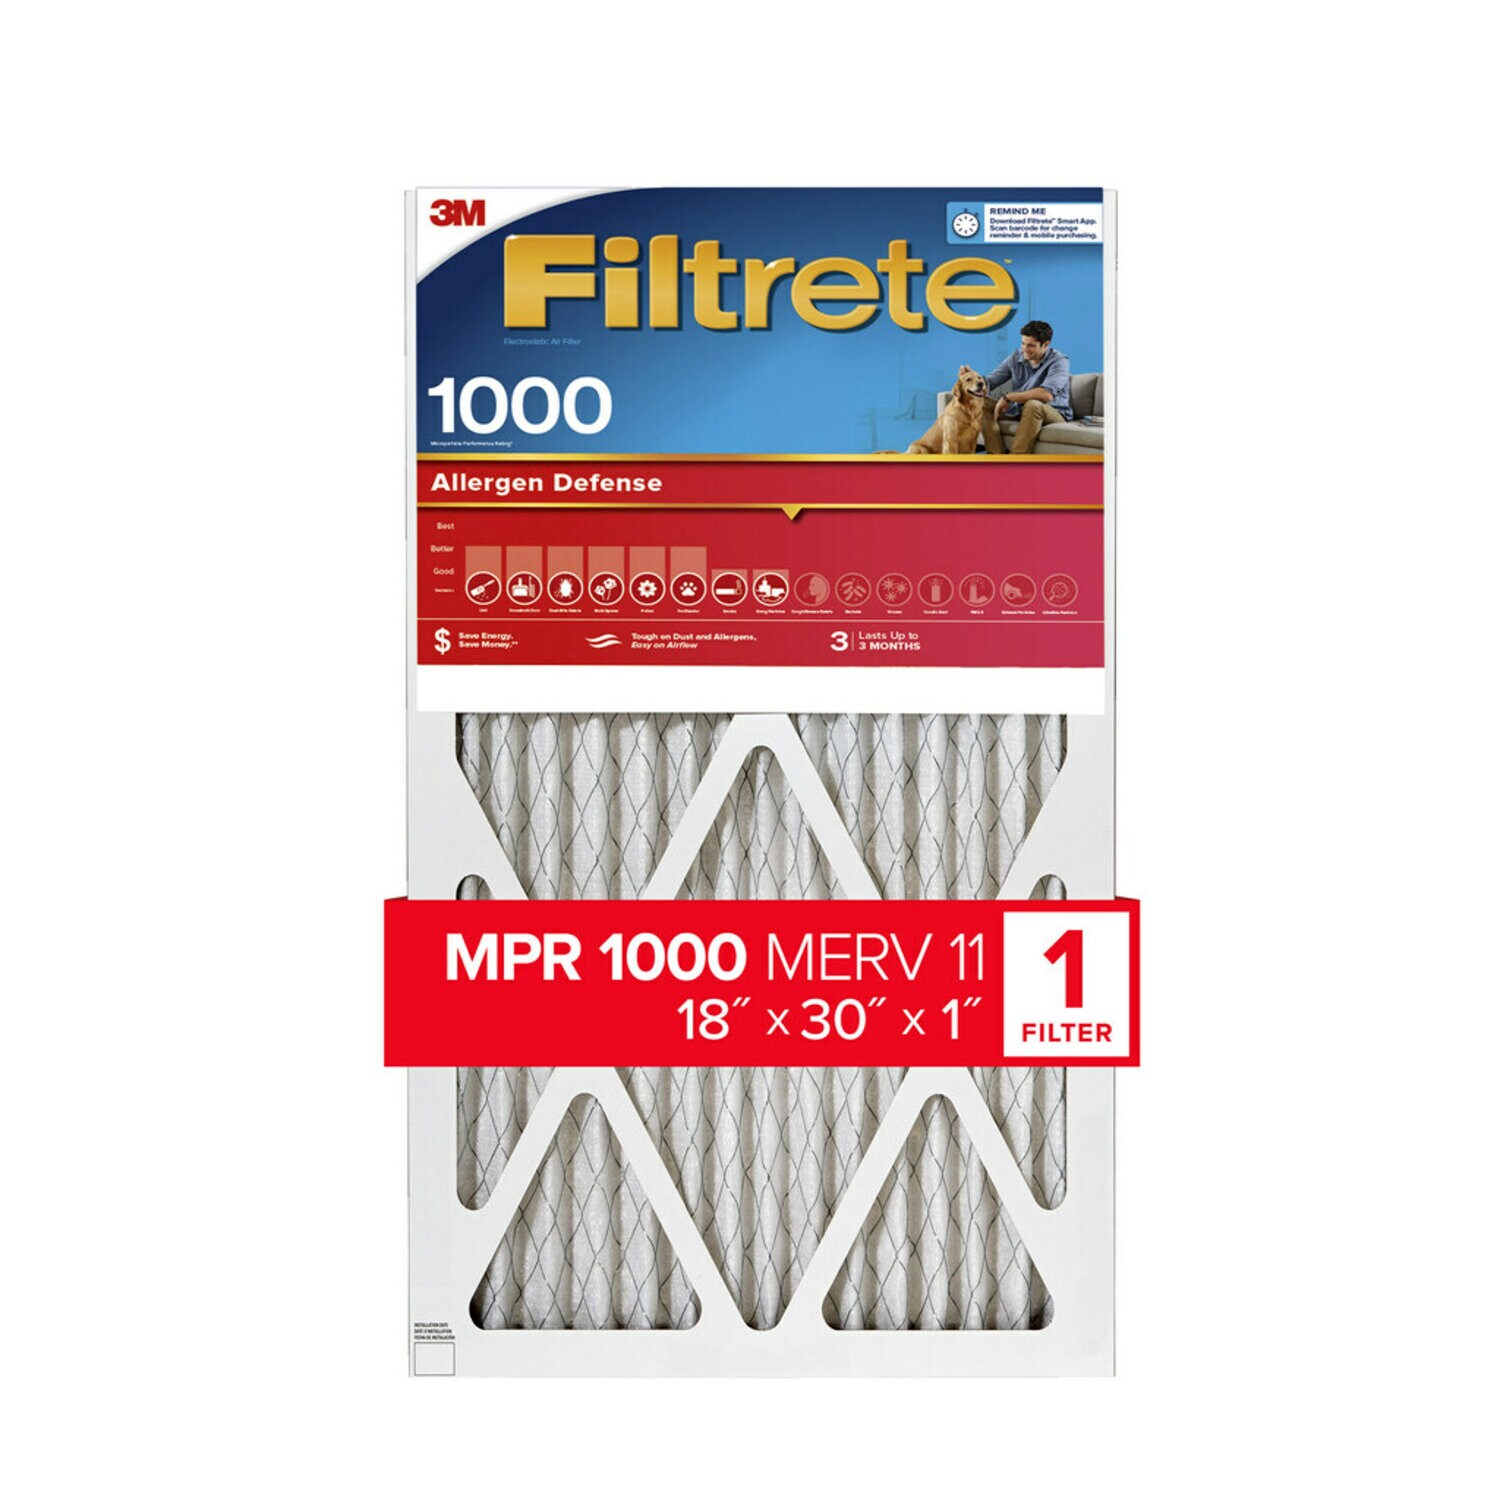 7100192556 - Filtrete Allergen Defense Air Filter, 1000 MPR, AL28-4, 18 in x 30 in x
1 in (45,7 cm x 76,2 cm x 2,5 cm)